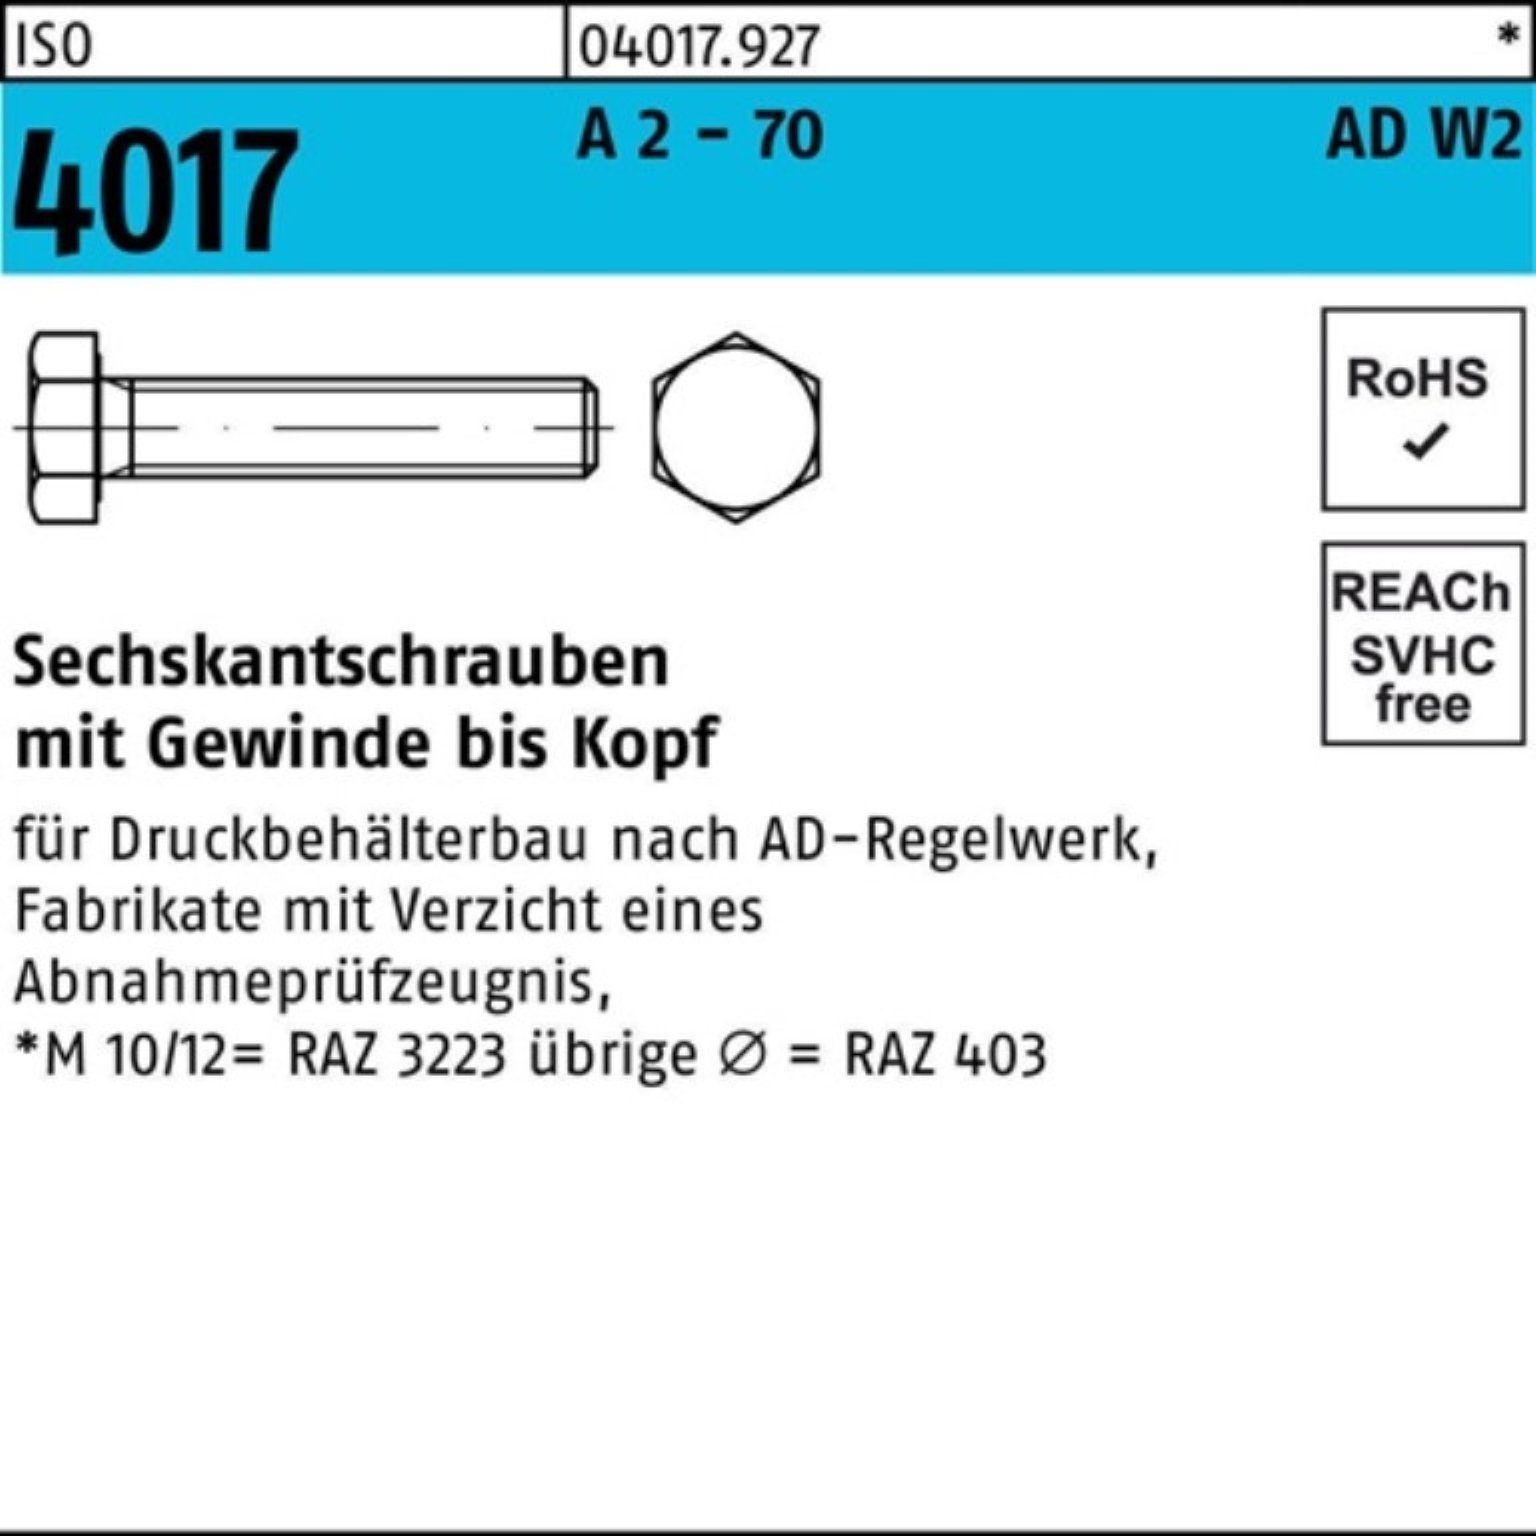 ISO Sechskantschraube M10x A 4017 2 St 50 100er - Bufab VG 100 Pack Sechskantschraube AD-W2 70